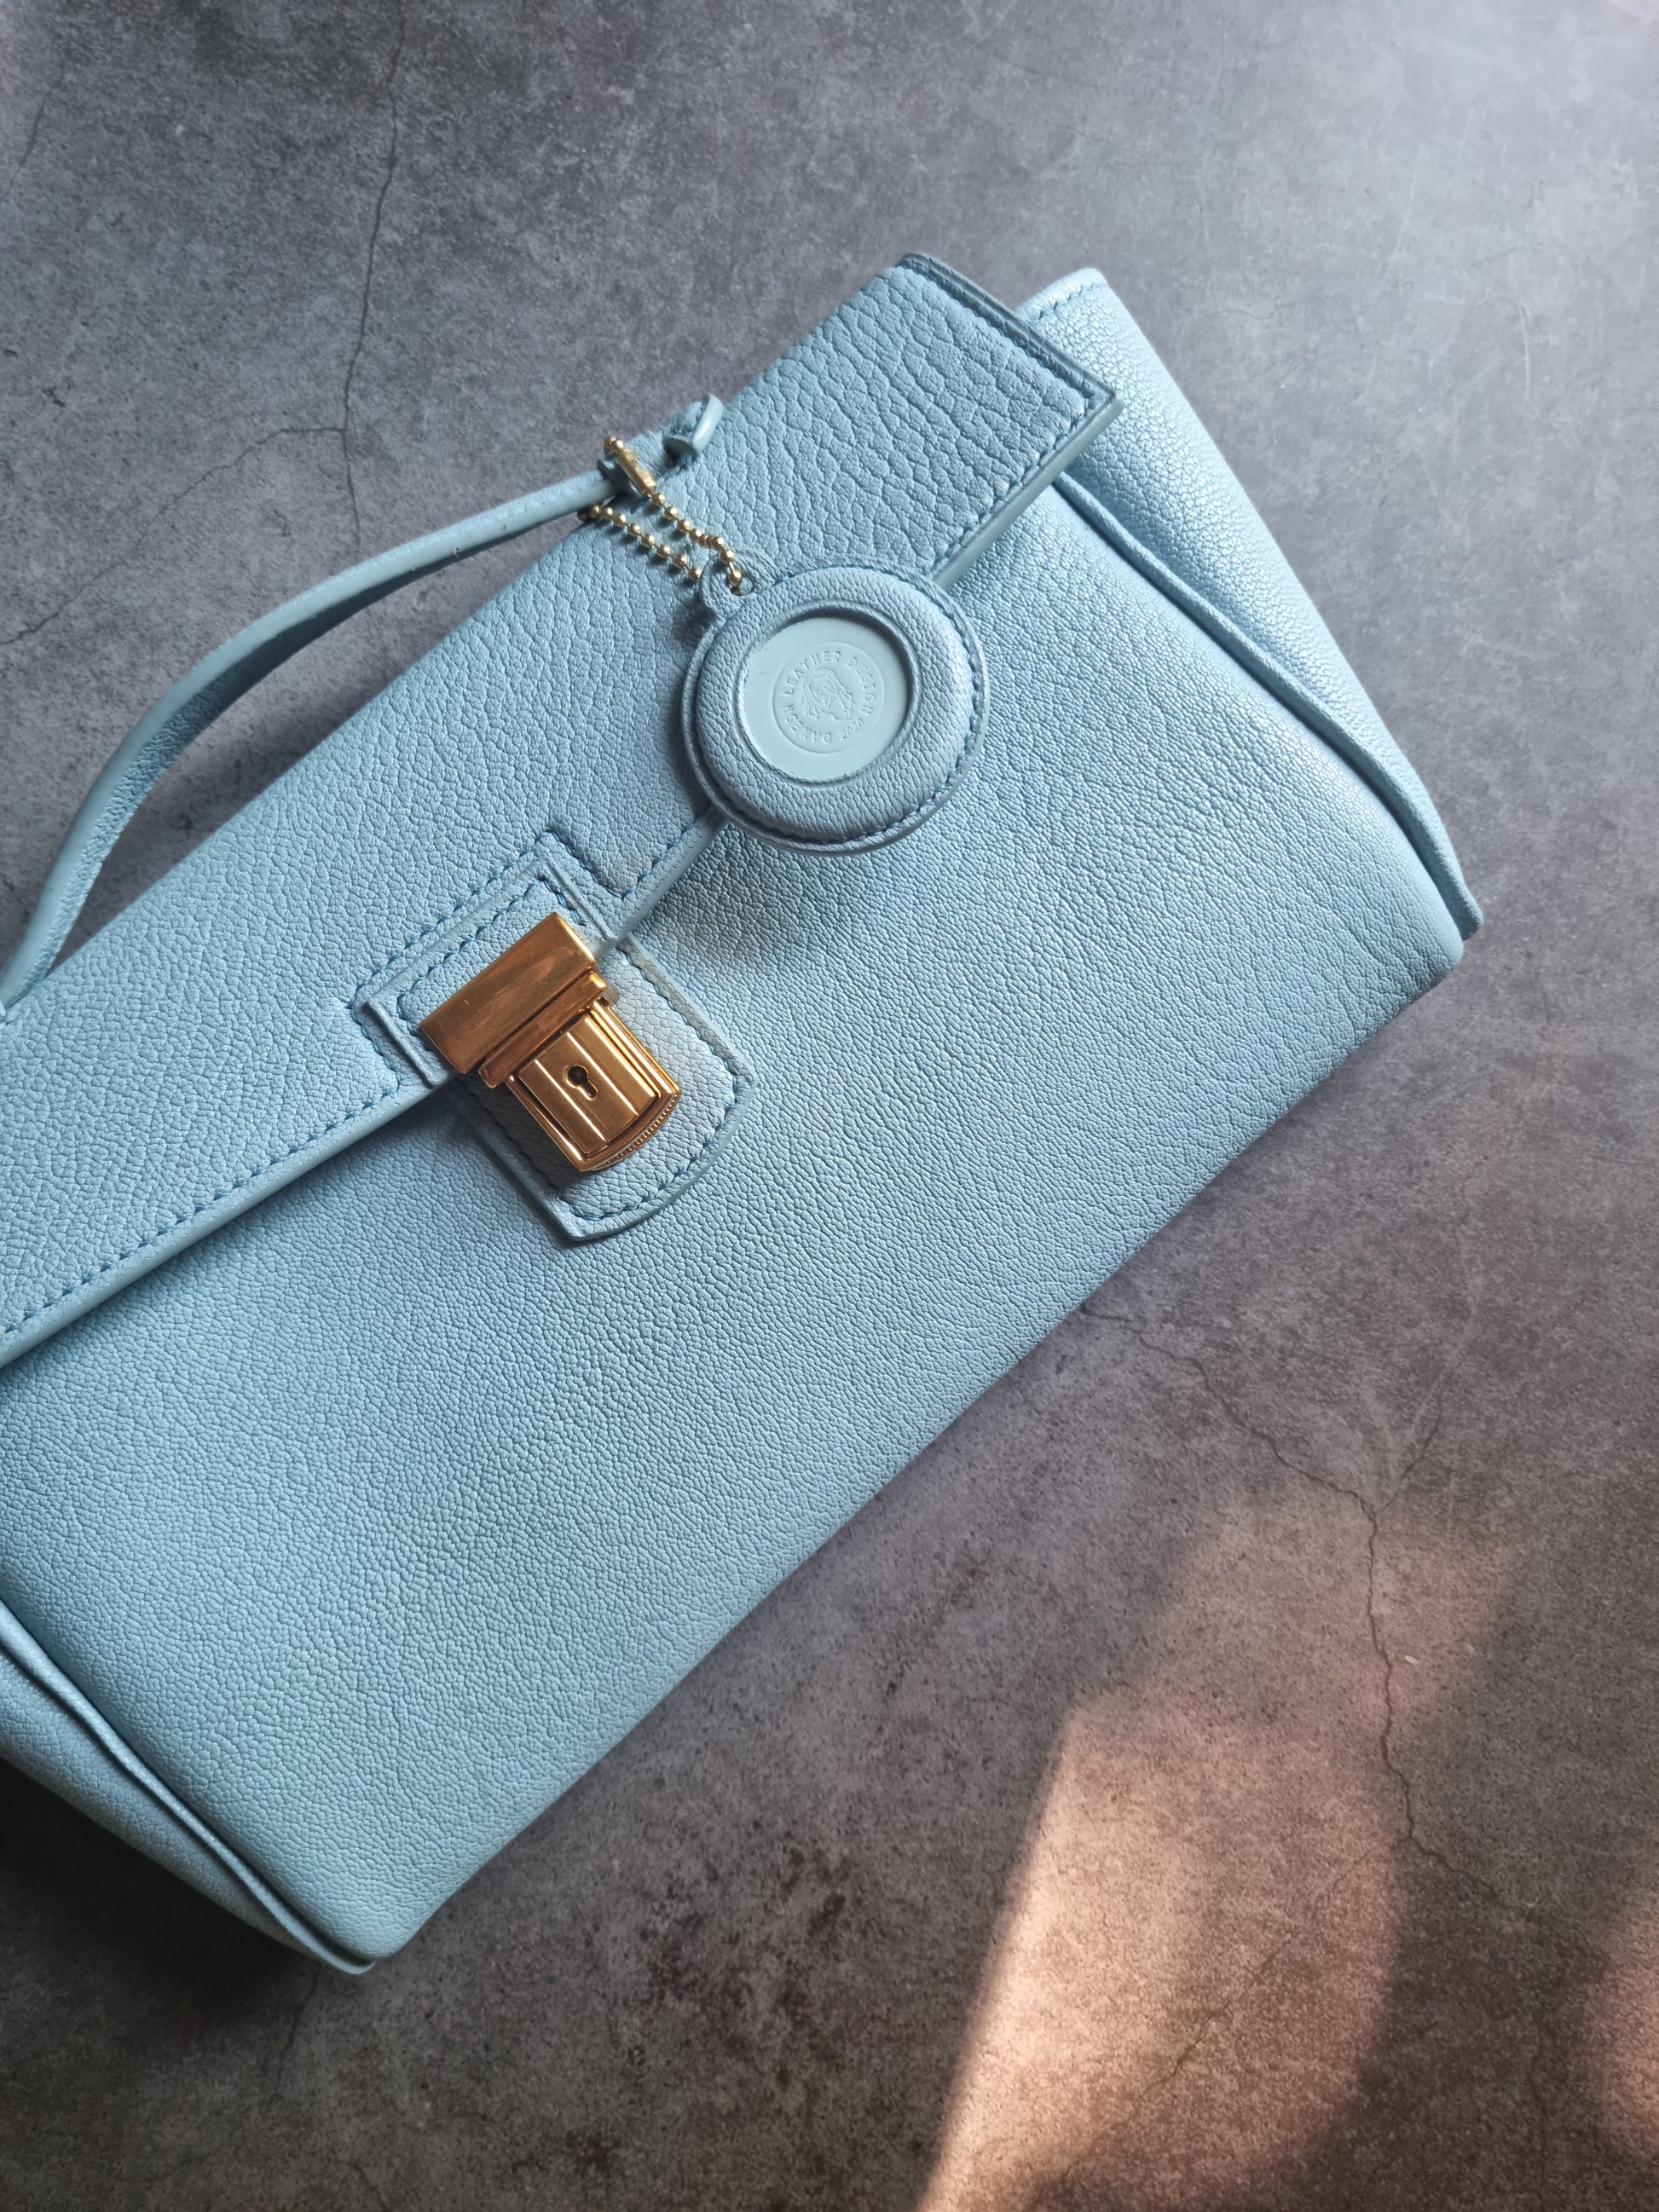 The Audrey handbag - Template - DIY - Pdf Pattern – Danesh leather